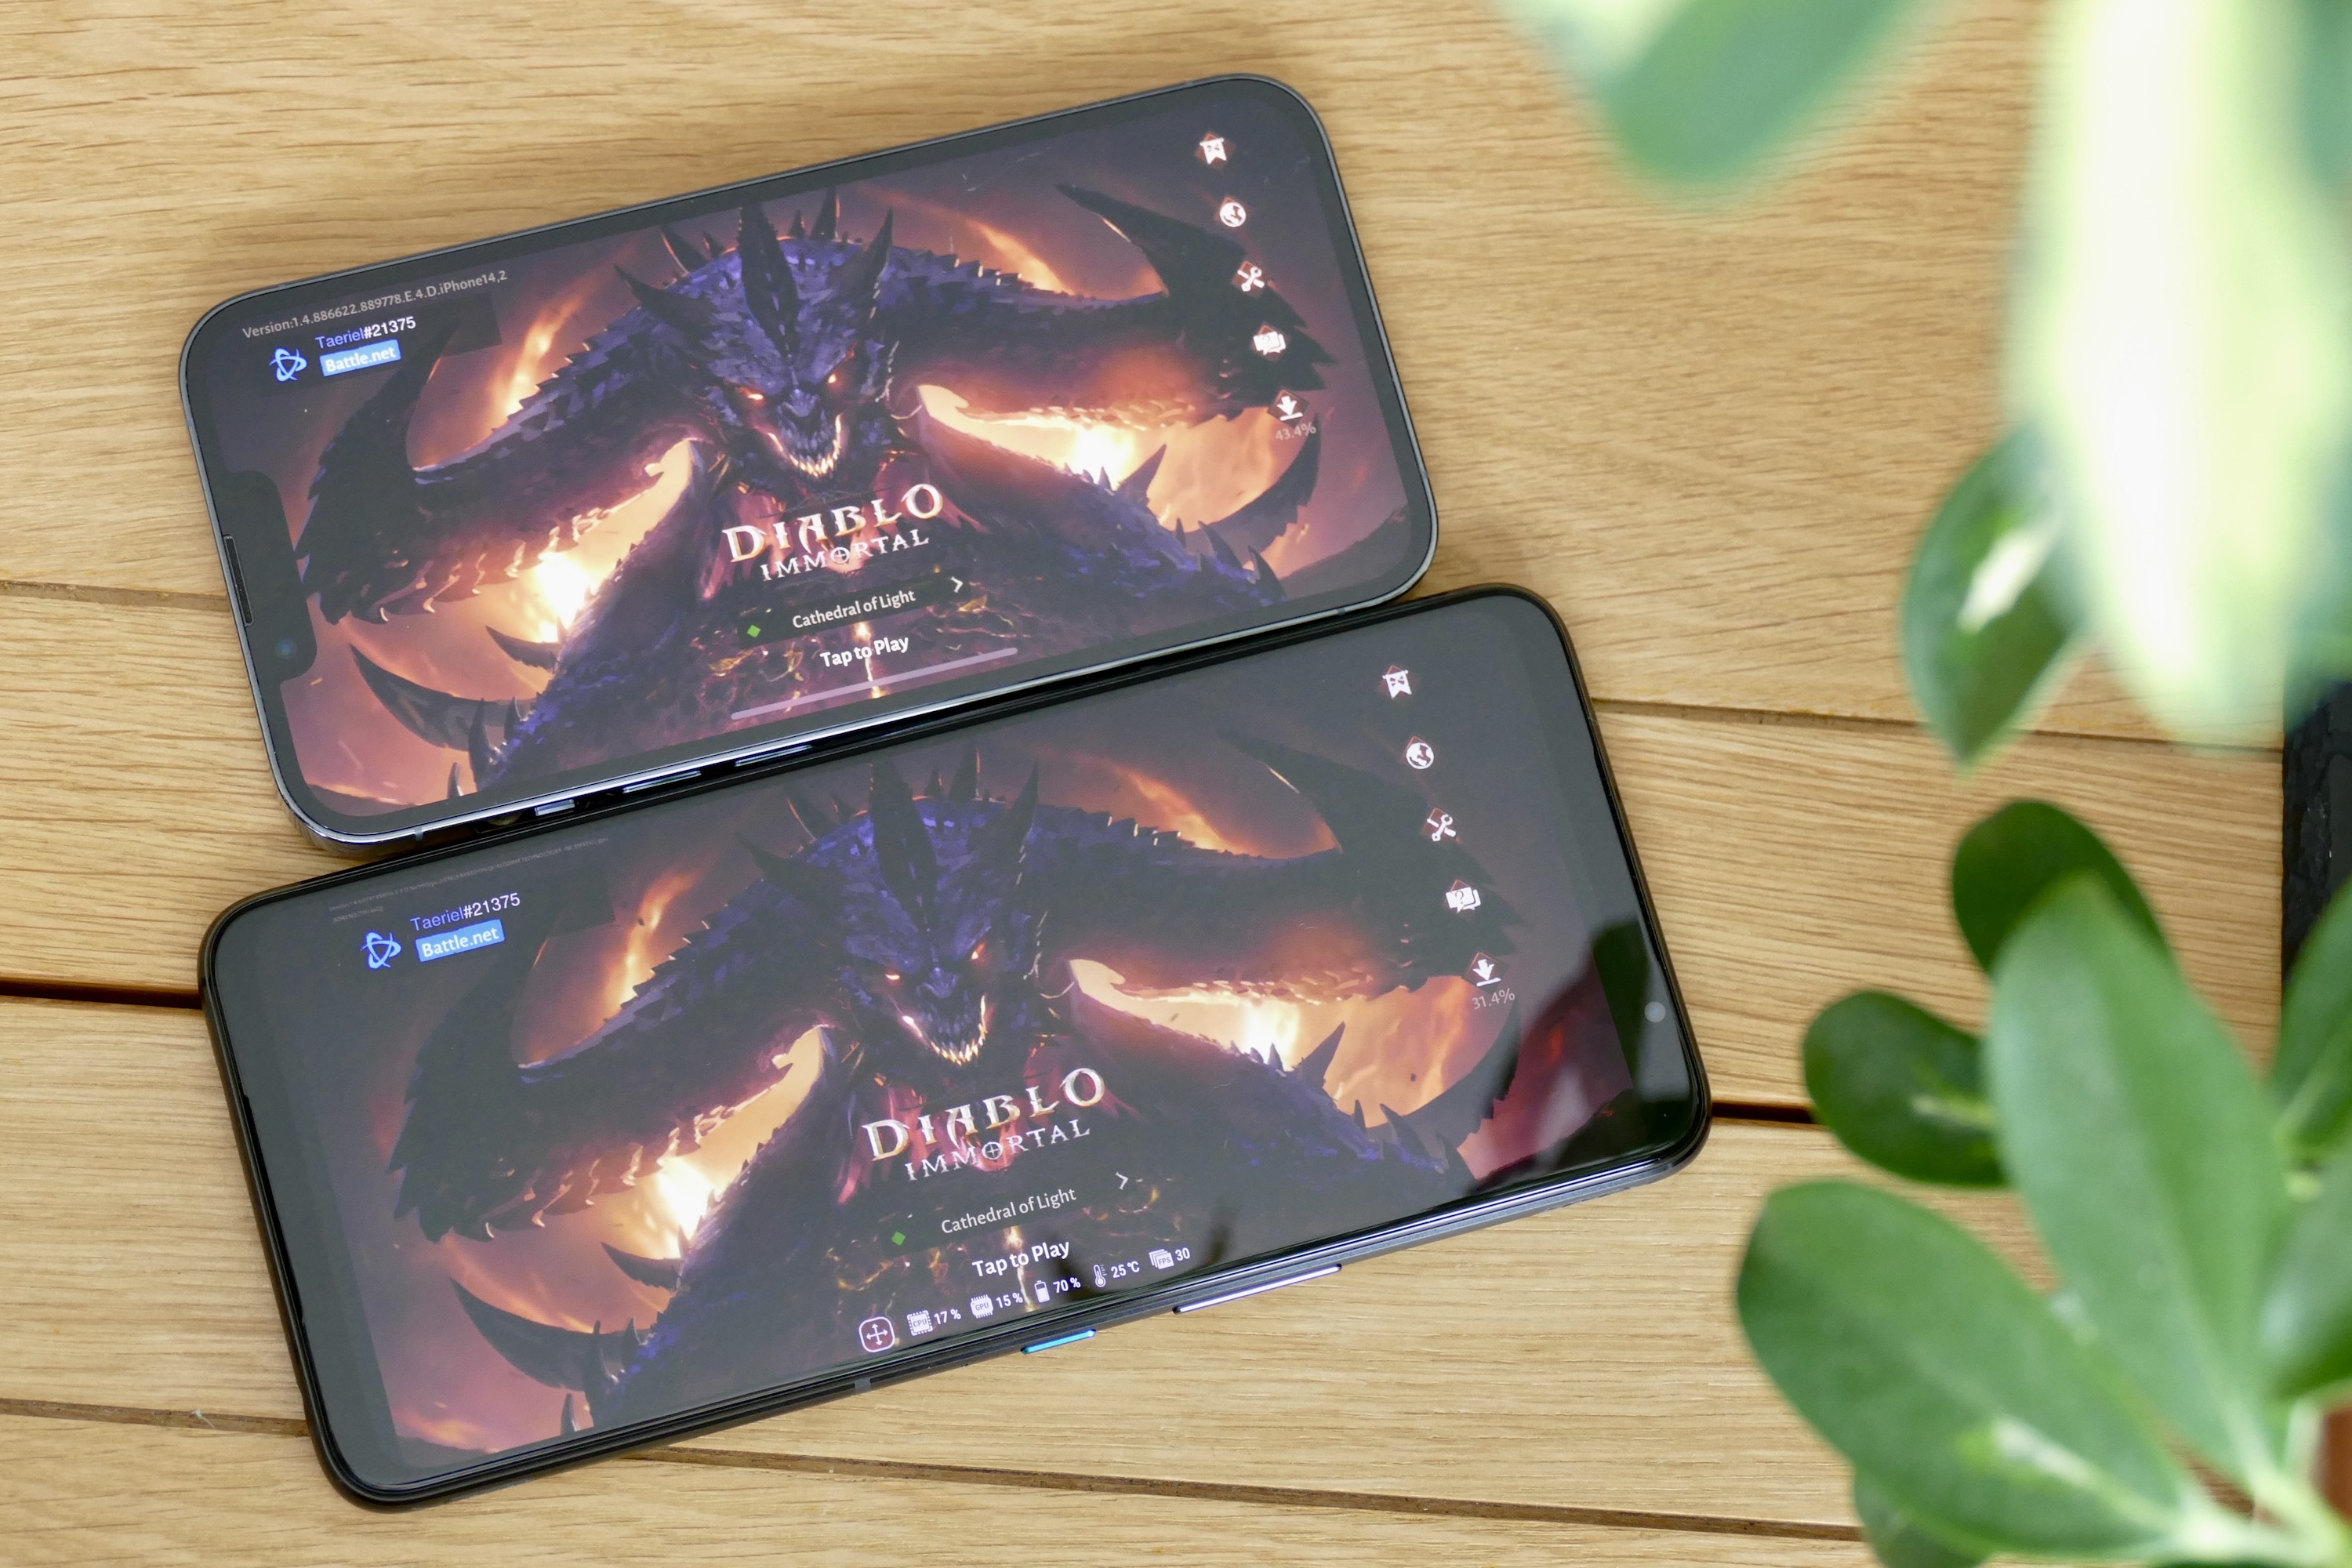  ASUS ROG Phone 6 Diablo Immortal Edition Cell Phone